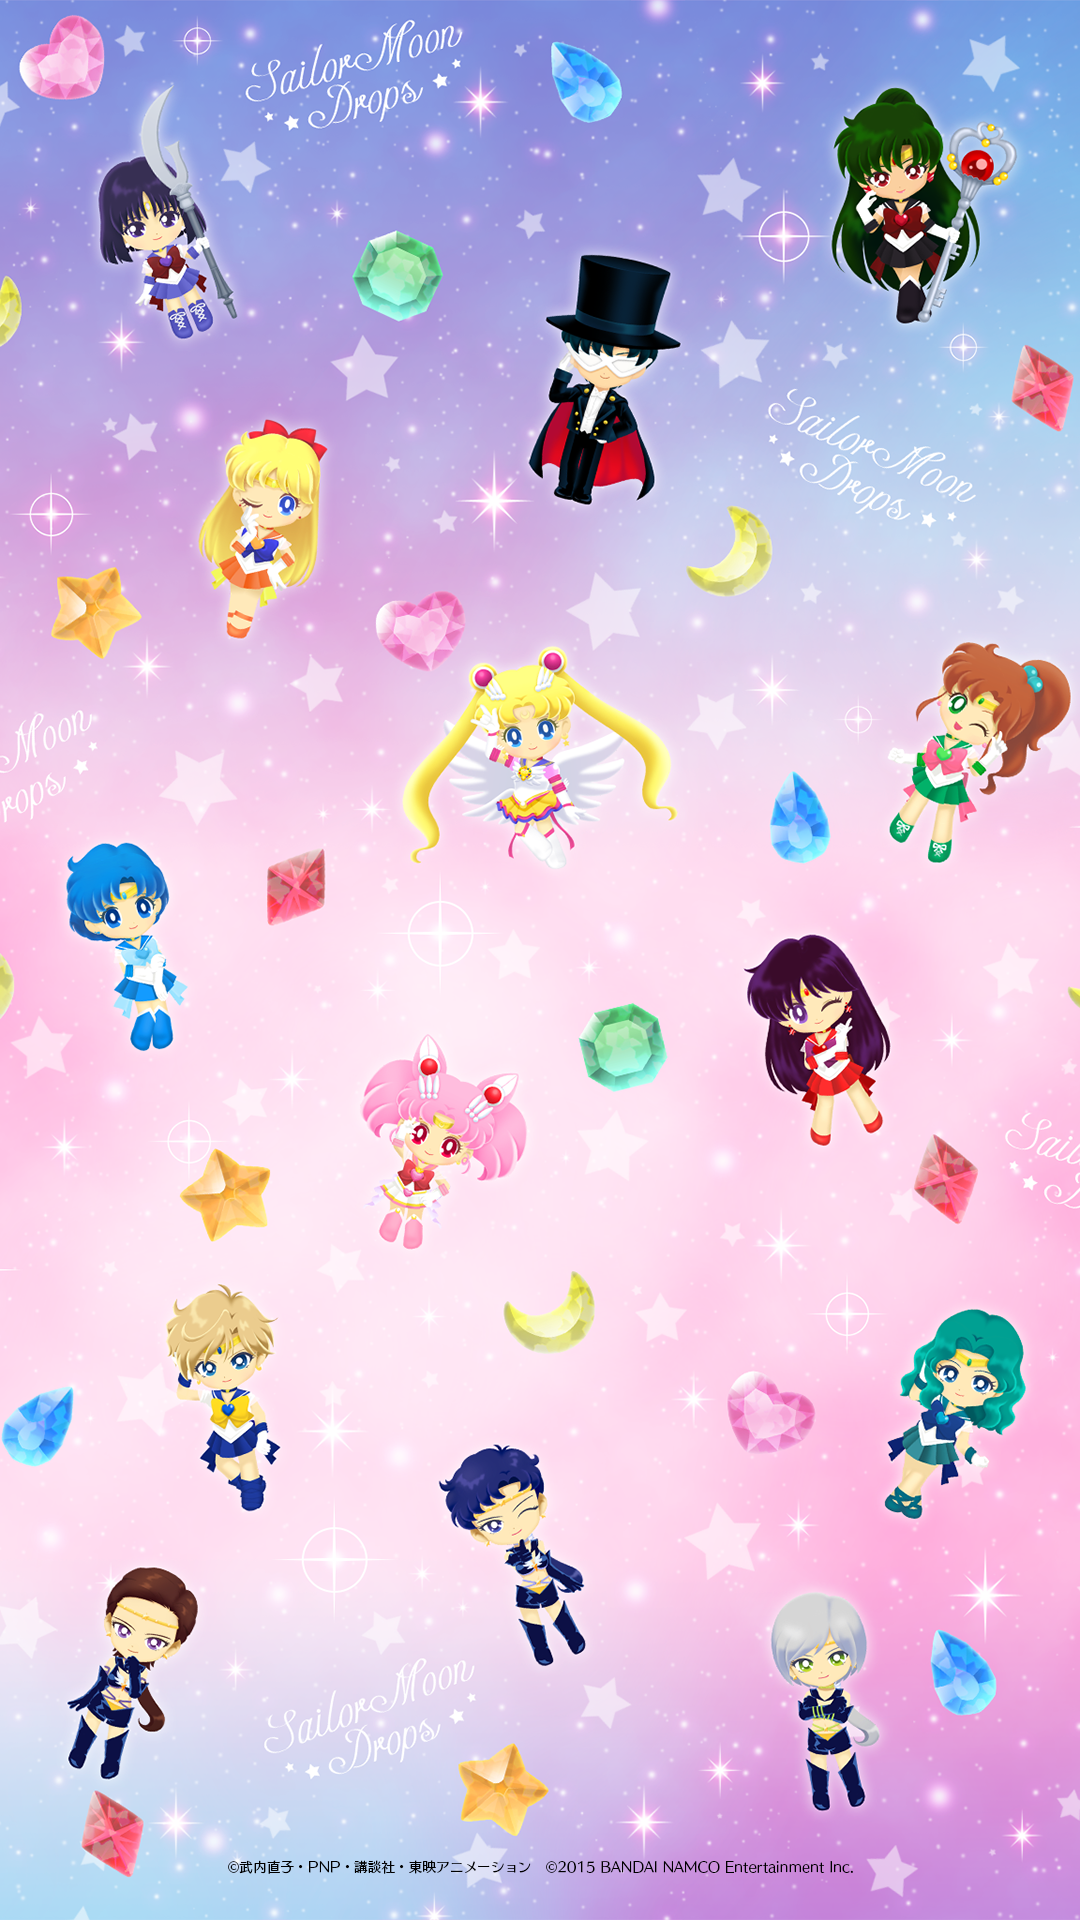 Kawaii Galaxy Sailor Moon Wallpapers - Wallpaper Cave